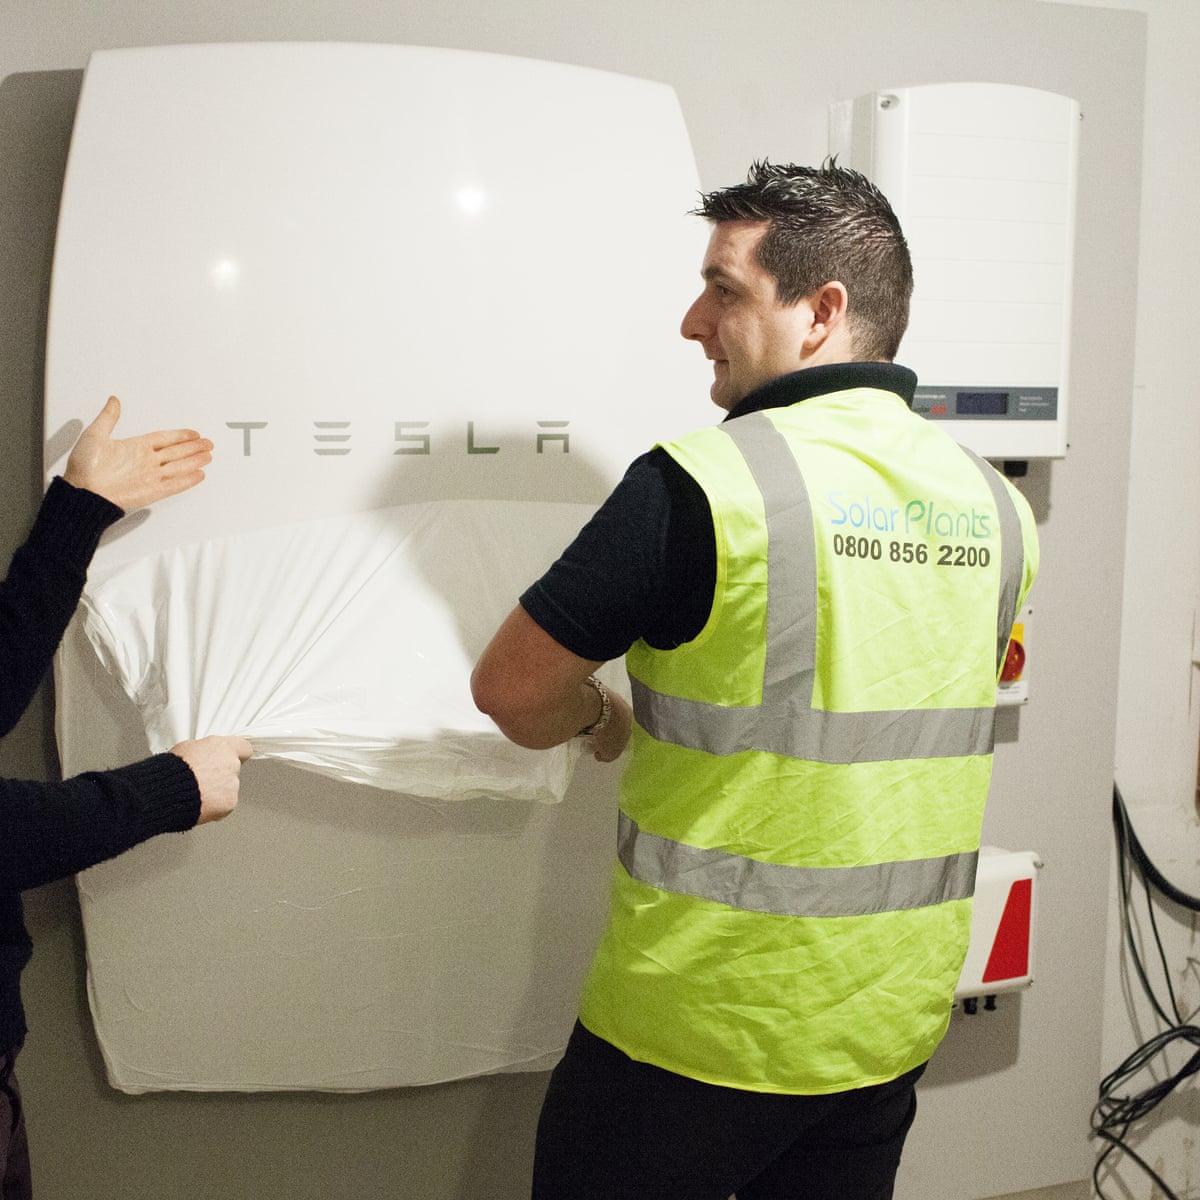 Welsh Home Installs Uk S First Tesla Powerwall Storage Battery Renewable Energy The Guardian